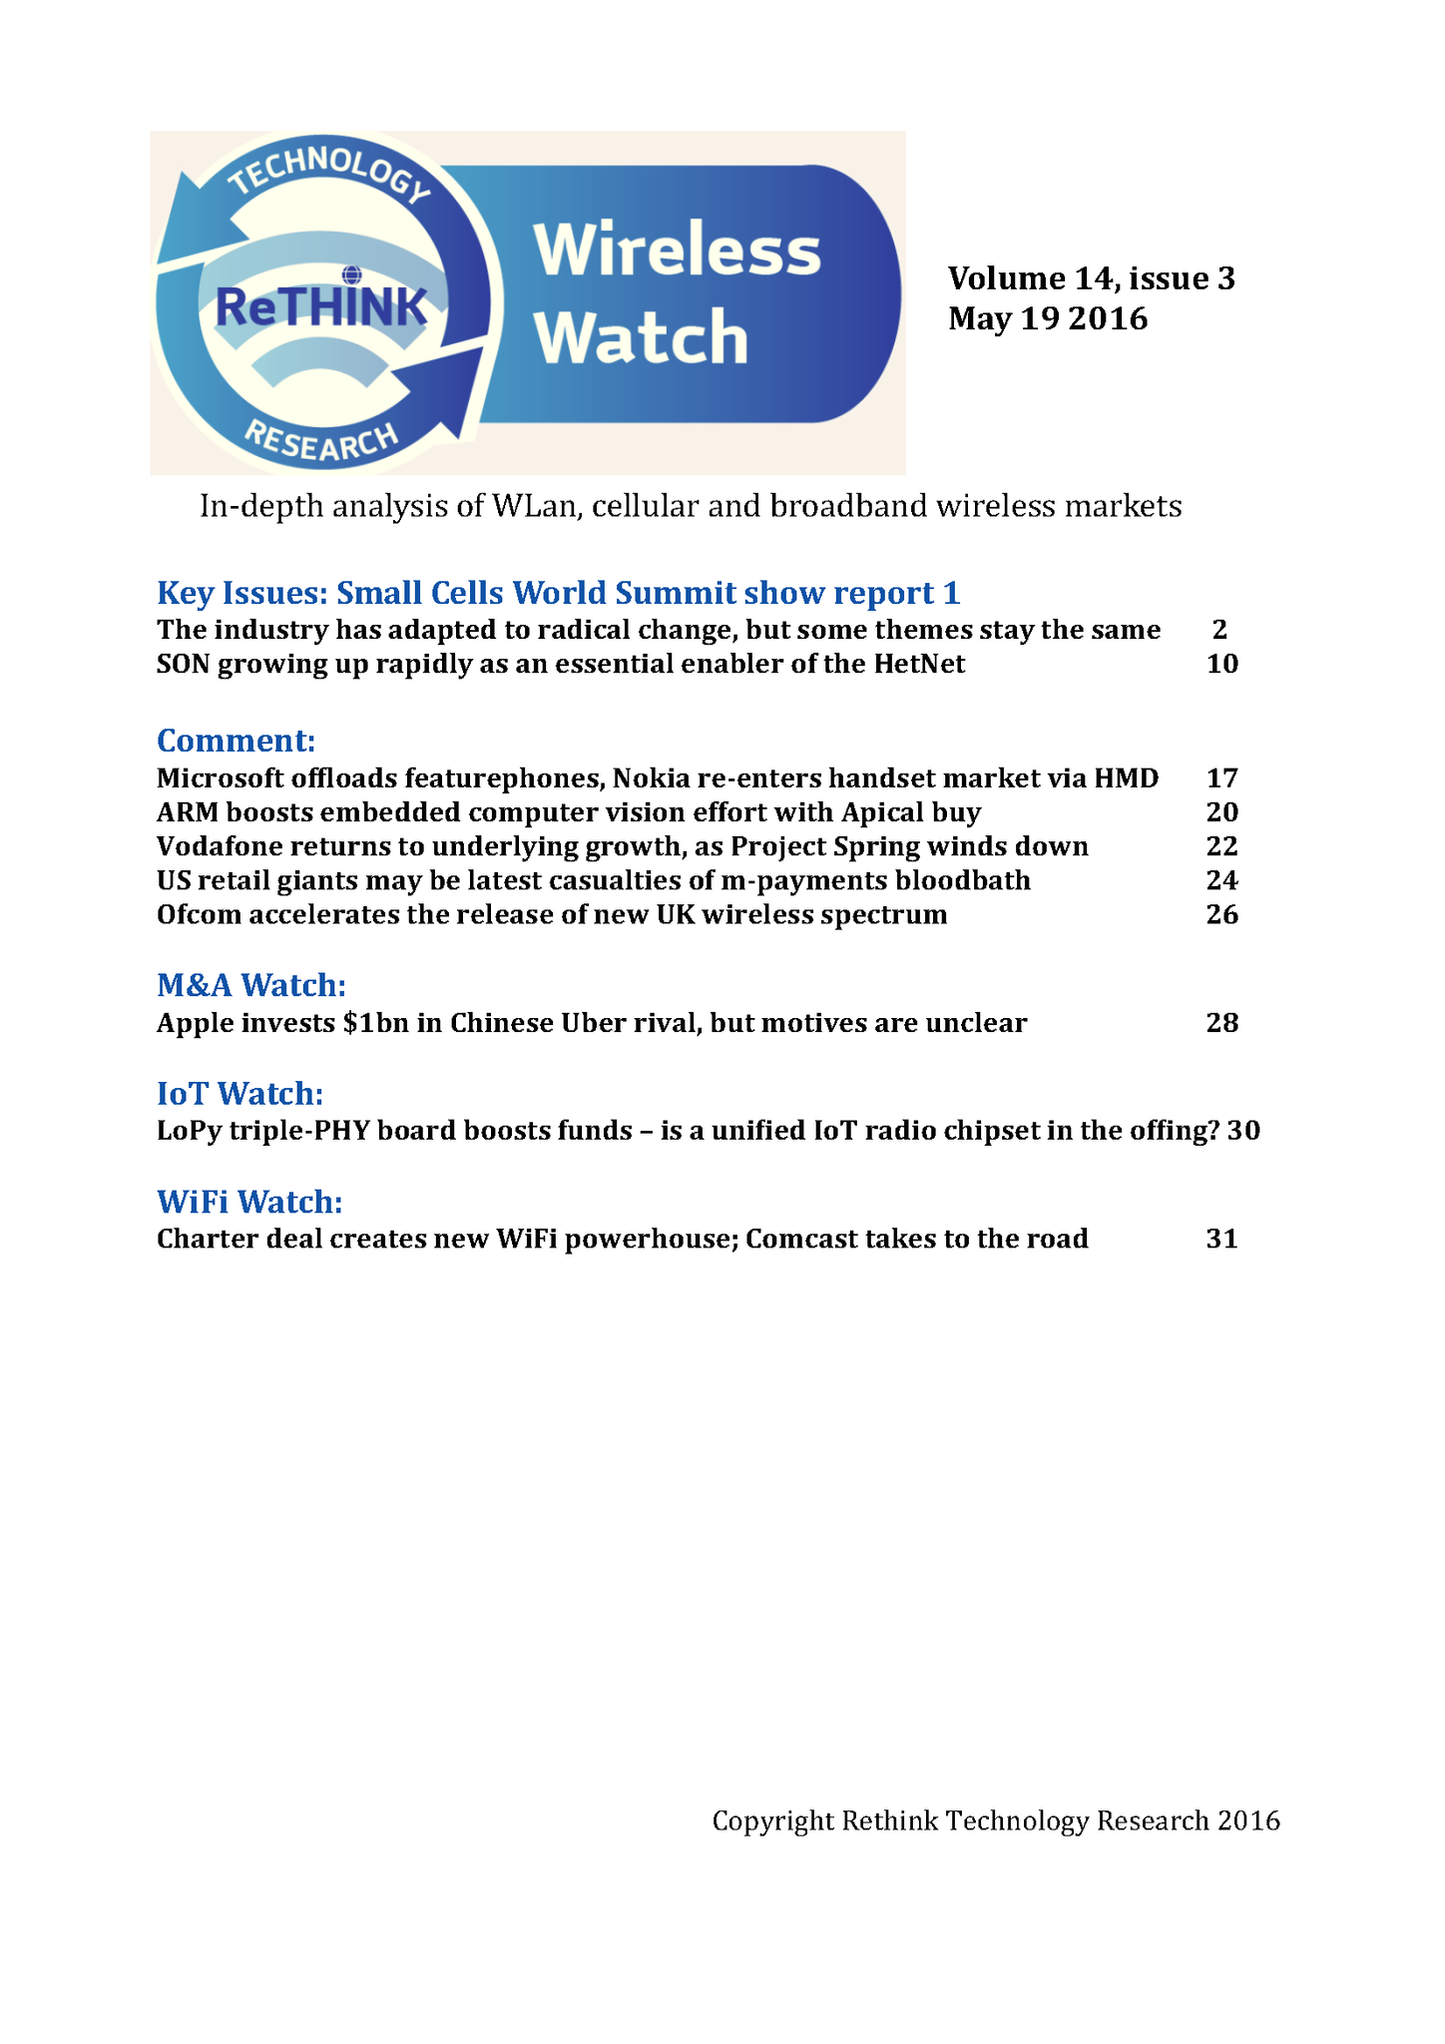 Wireless Watch 639:Small Cells World Summit report part 1